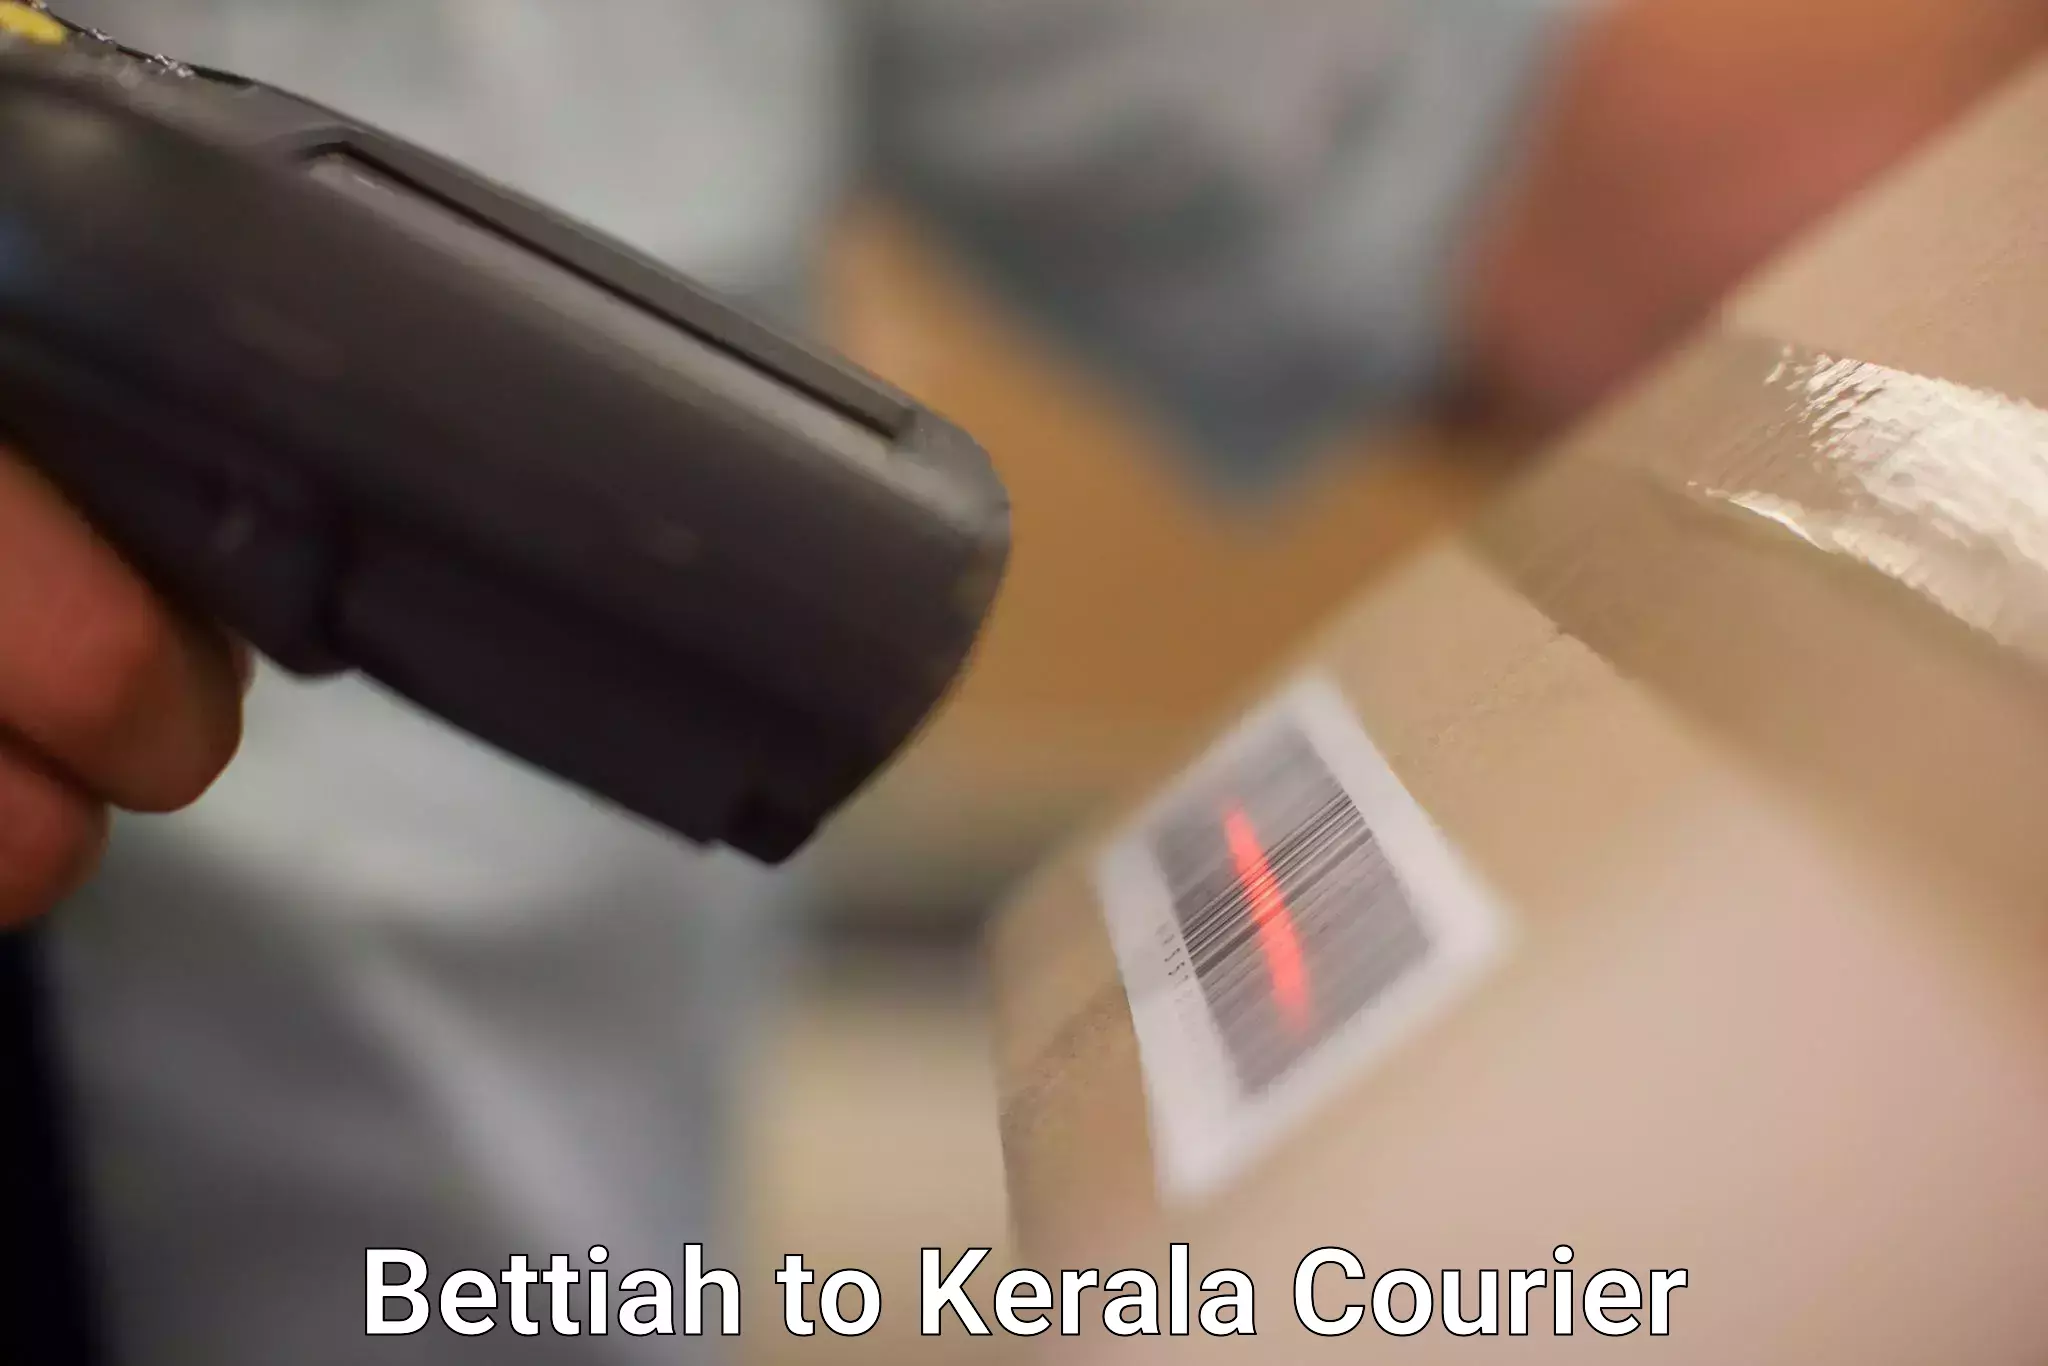 Courier service comparison Bettiah to Kerala